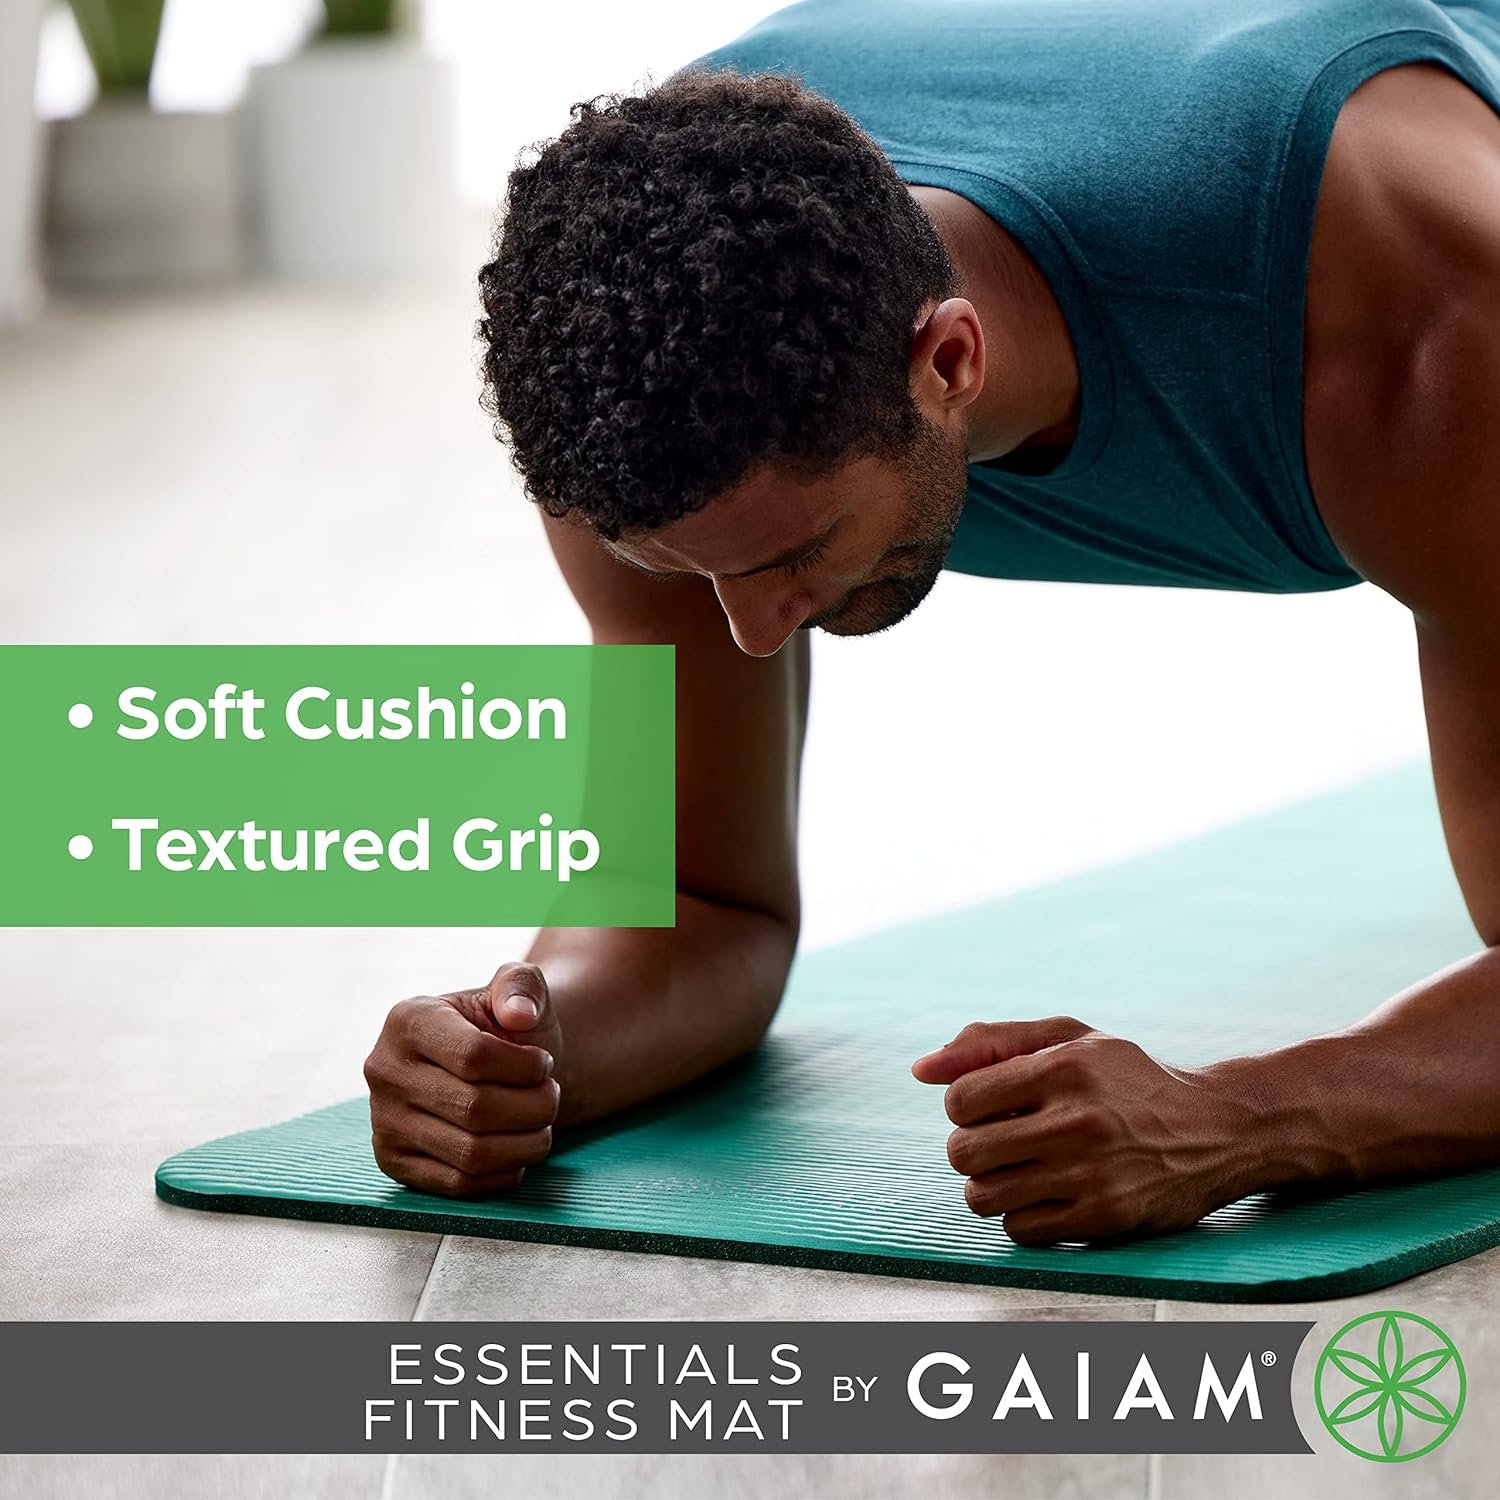 Gaiam Essentials Yoga Mat Review